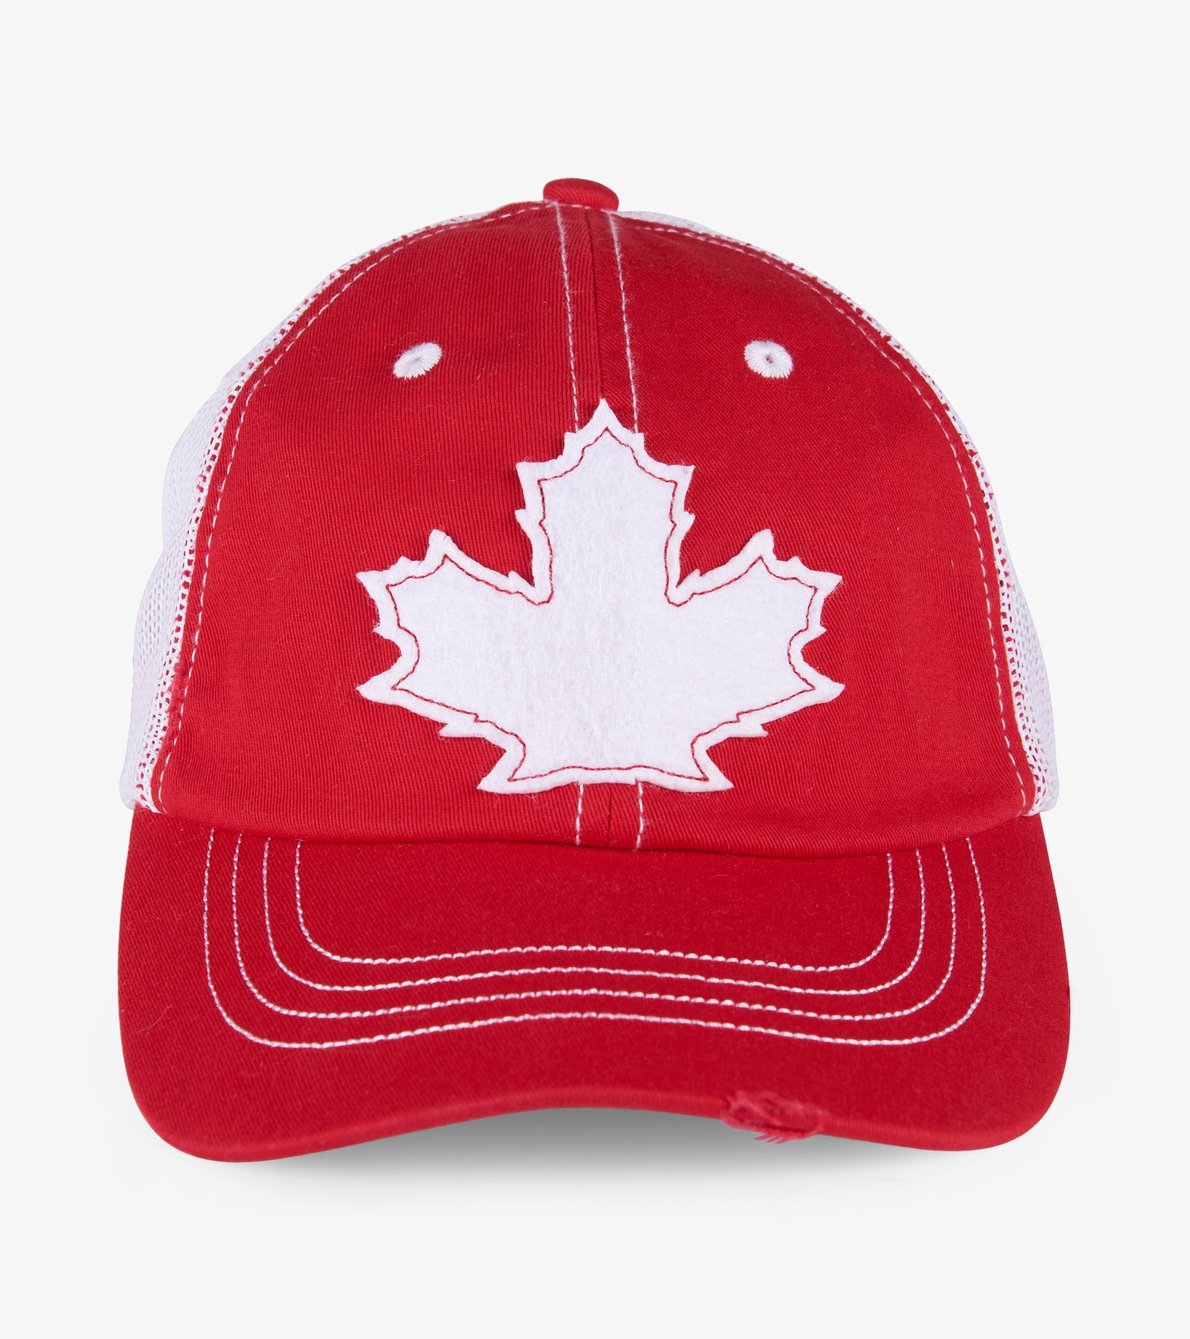 View larger image of Maple Leaf Kids Baseball Cap